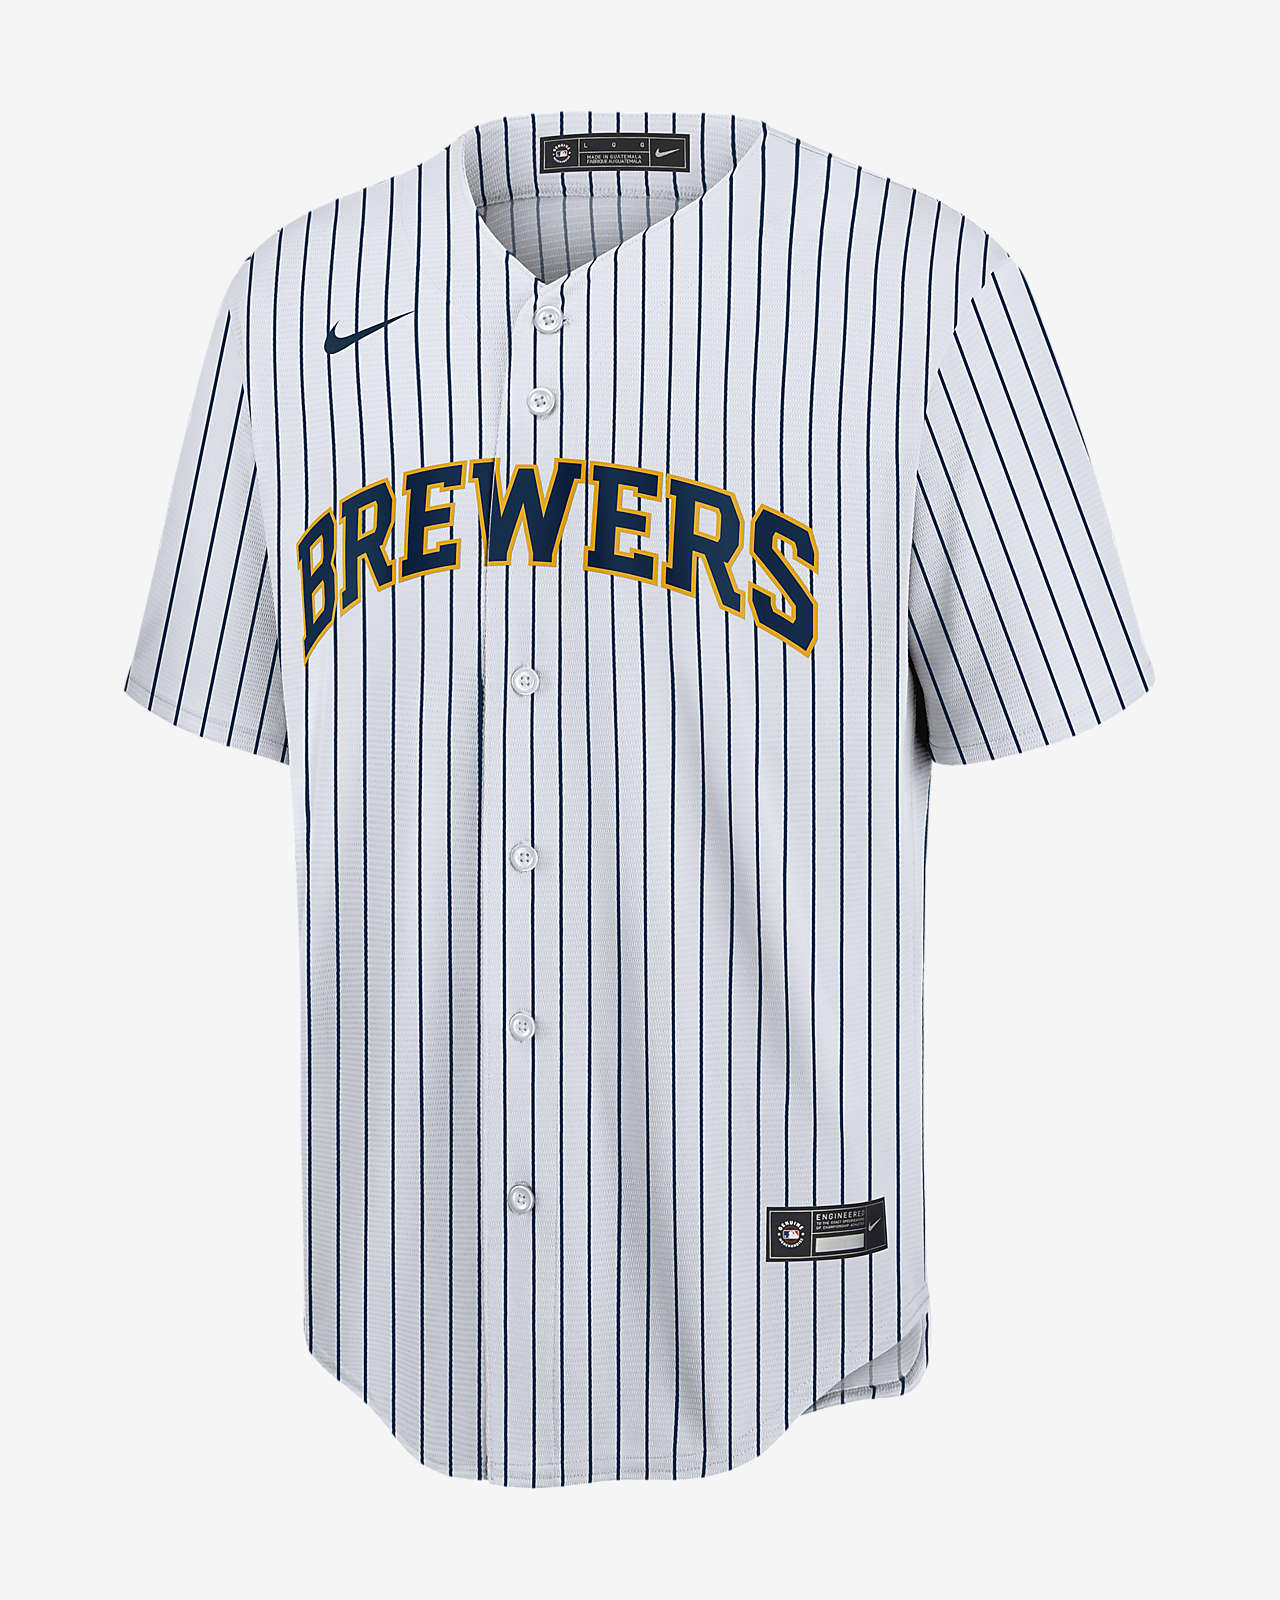 milwaukee brewers baseball jersey